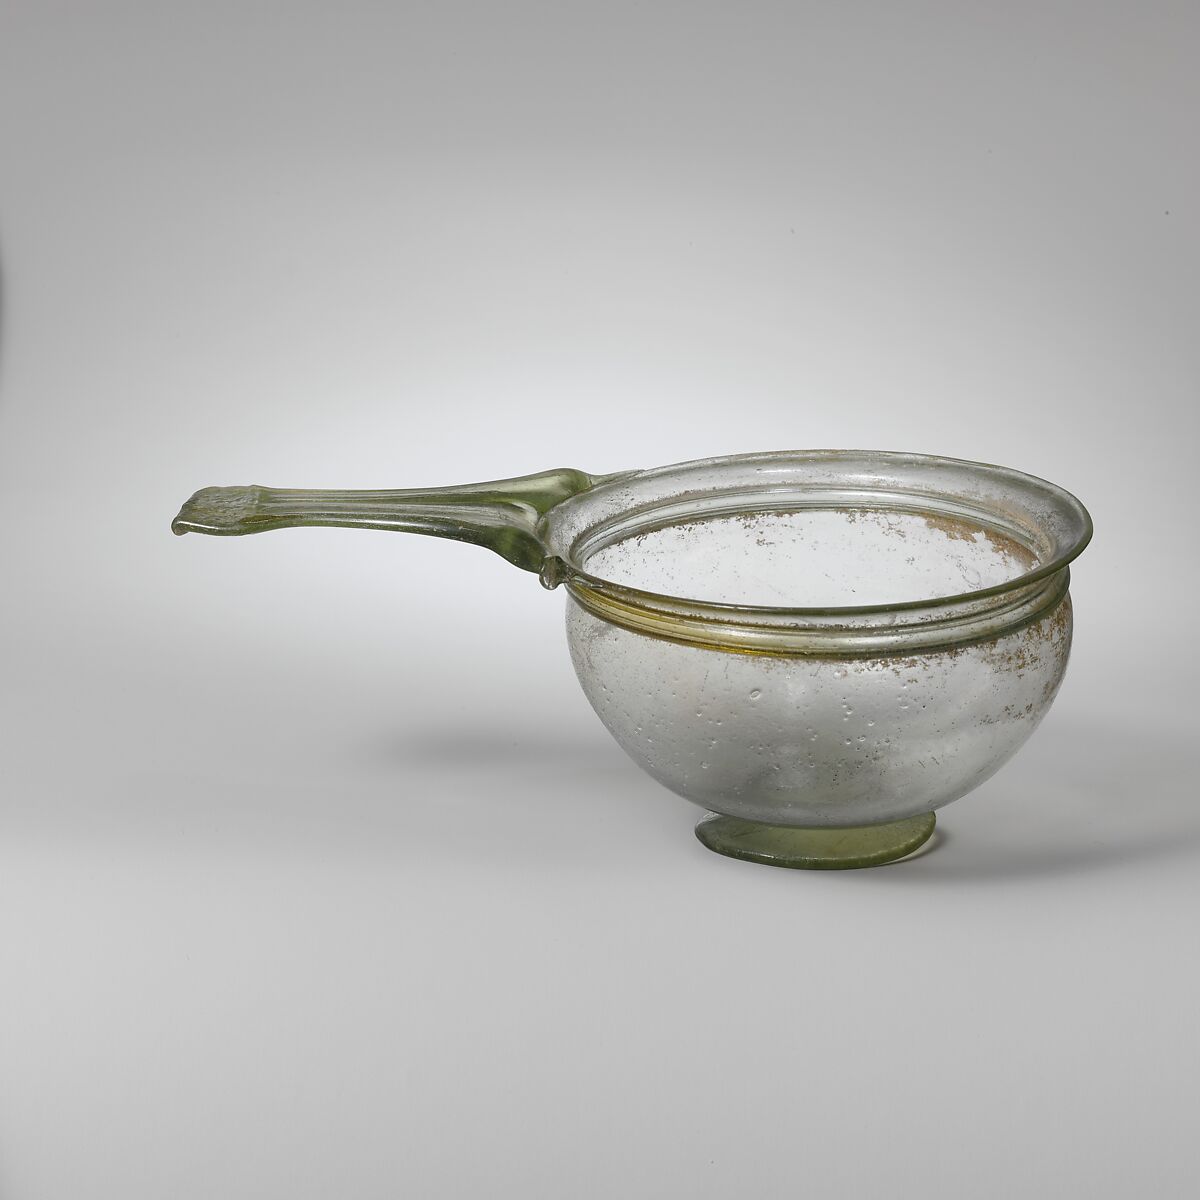 Glass trulla (pan), Glass, Roman 